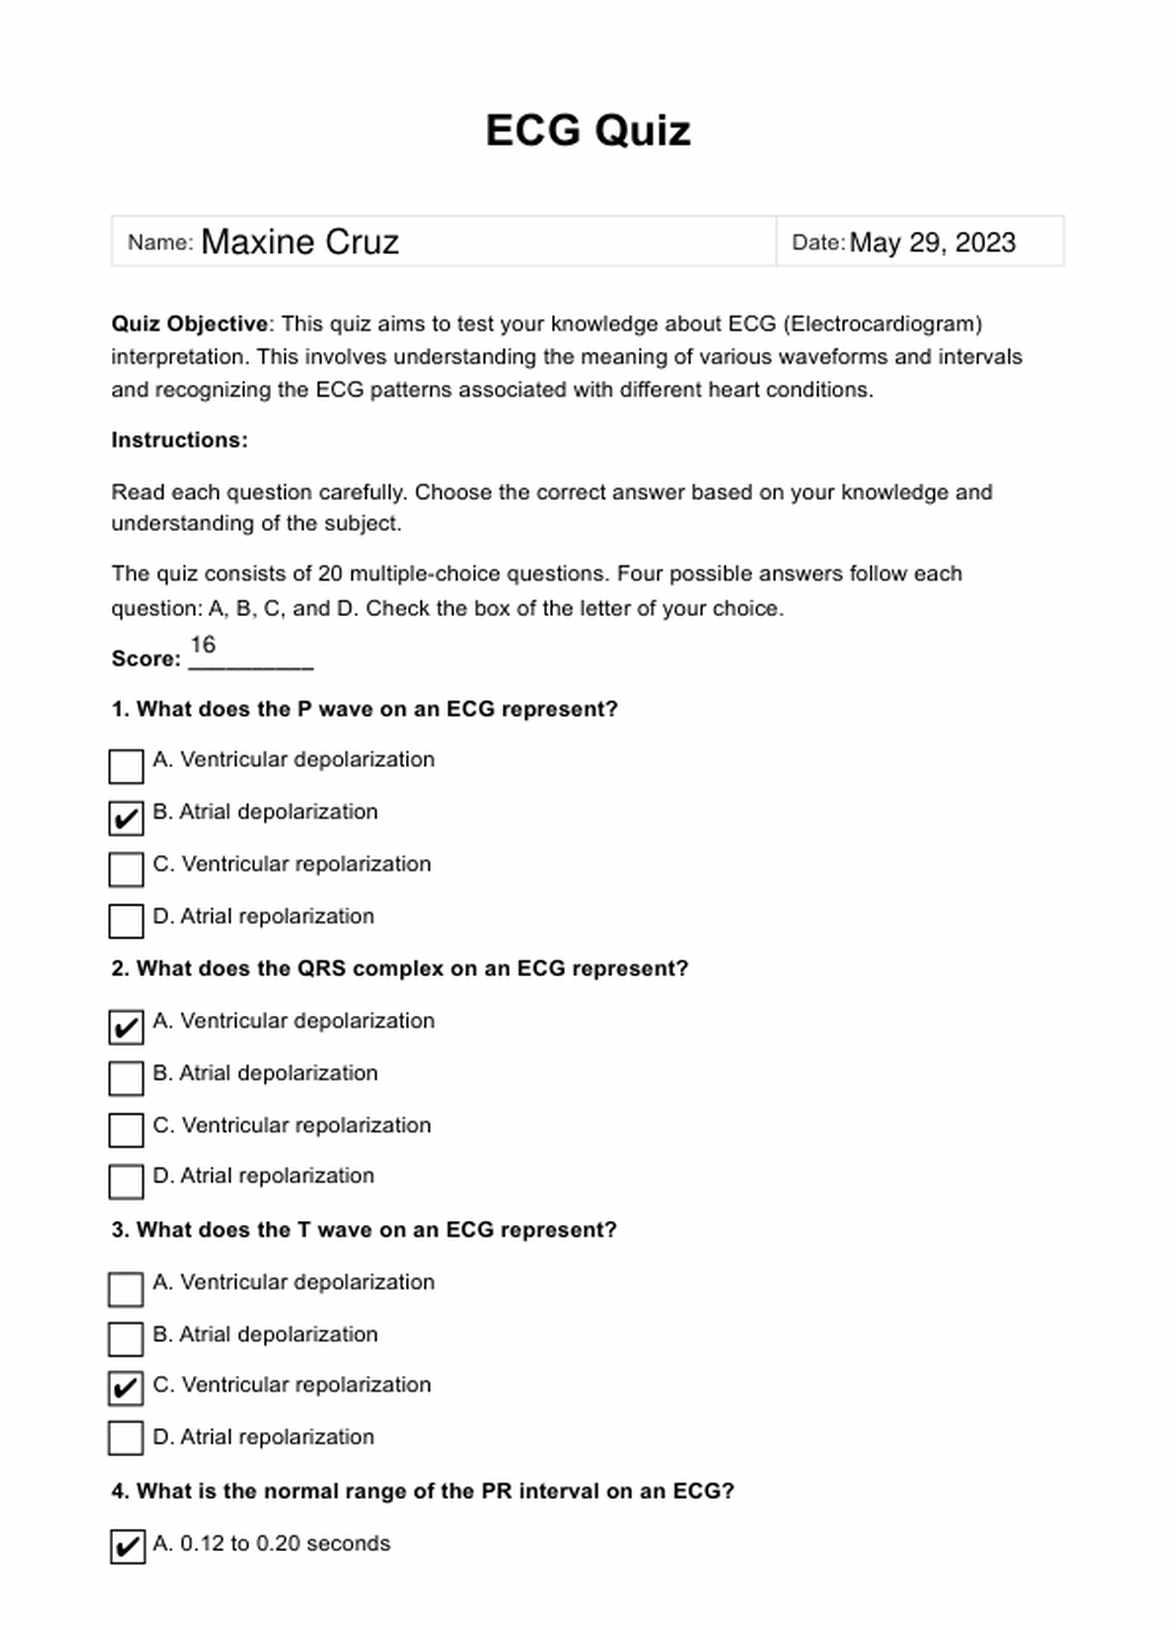 ECG Quiz PDF Example